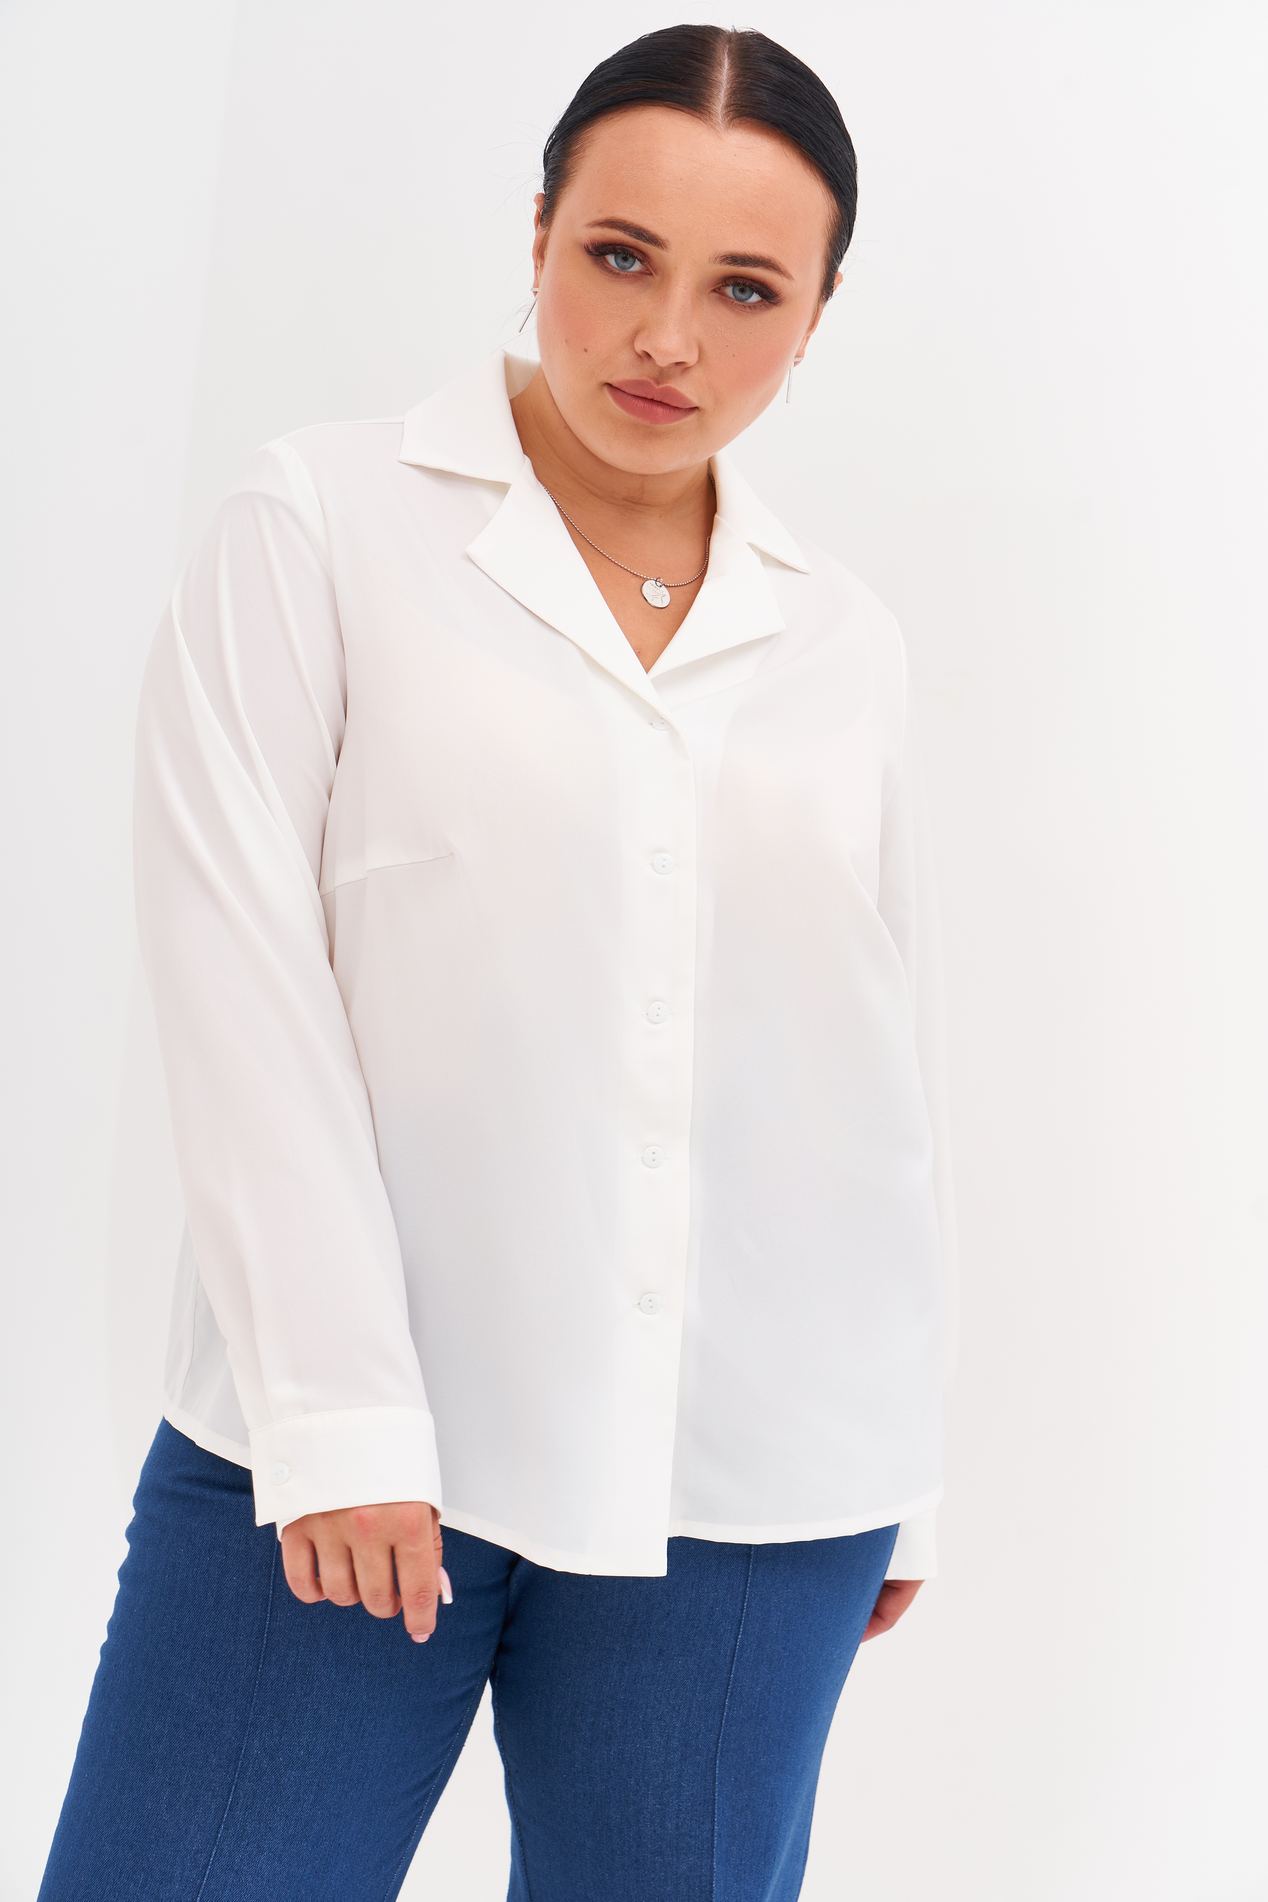 Buy Women's plus size shirt - VOVK women's clothing online store